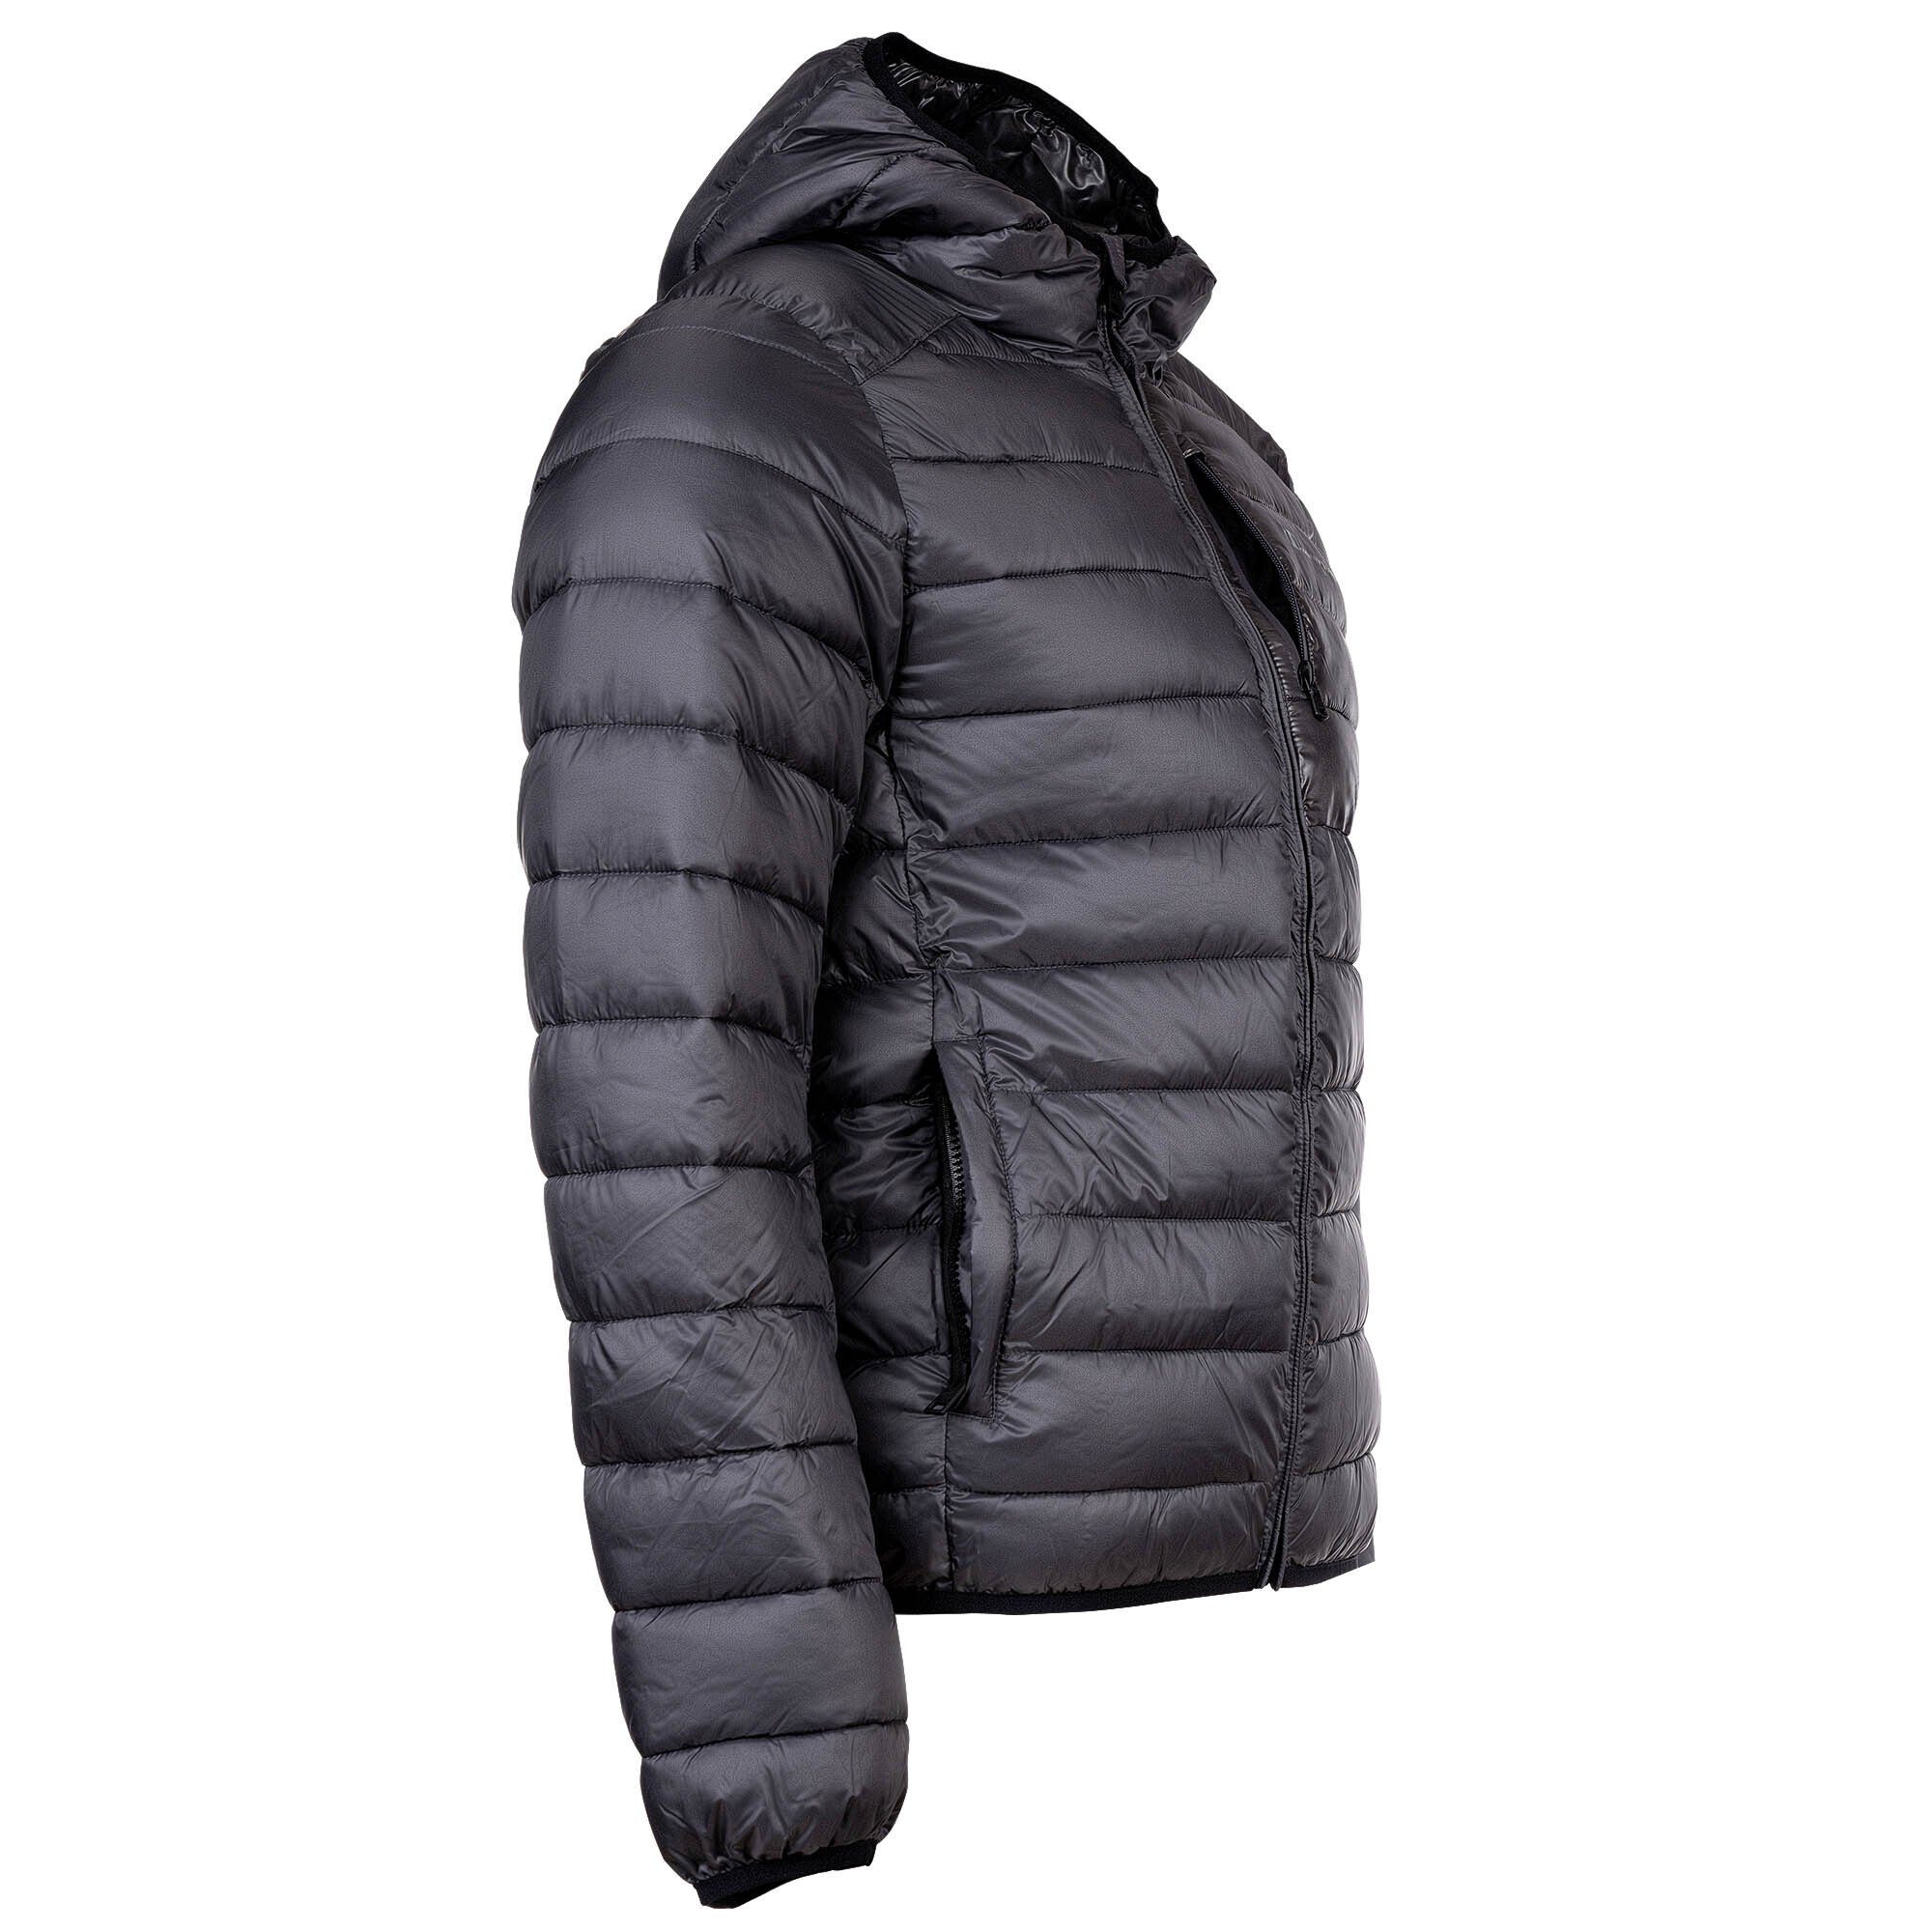 Hooded Jacke Jacket, Champion Grau Outdoor Herren - Steppjacke